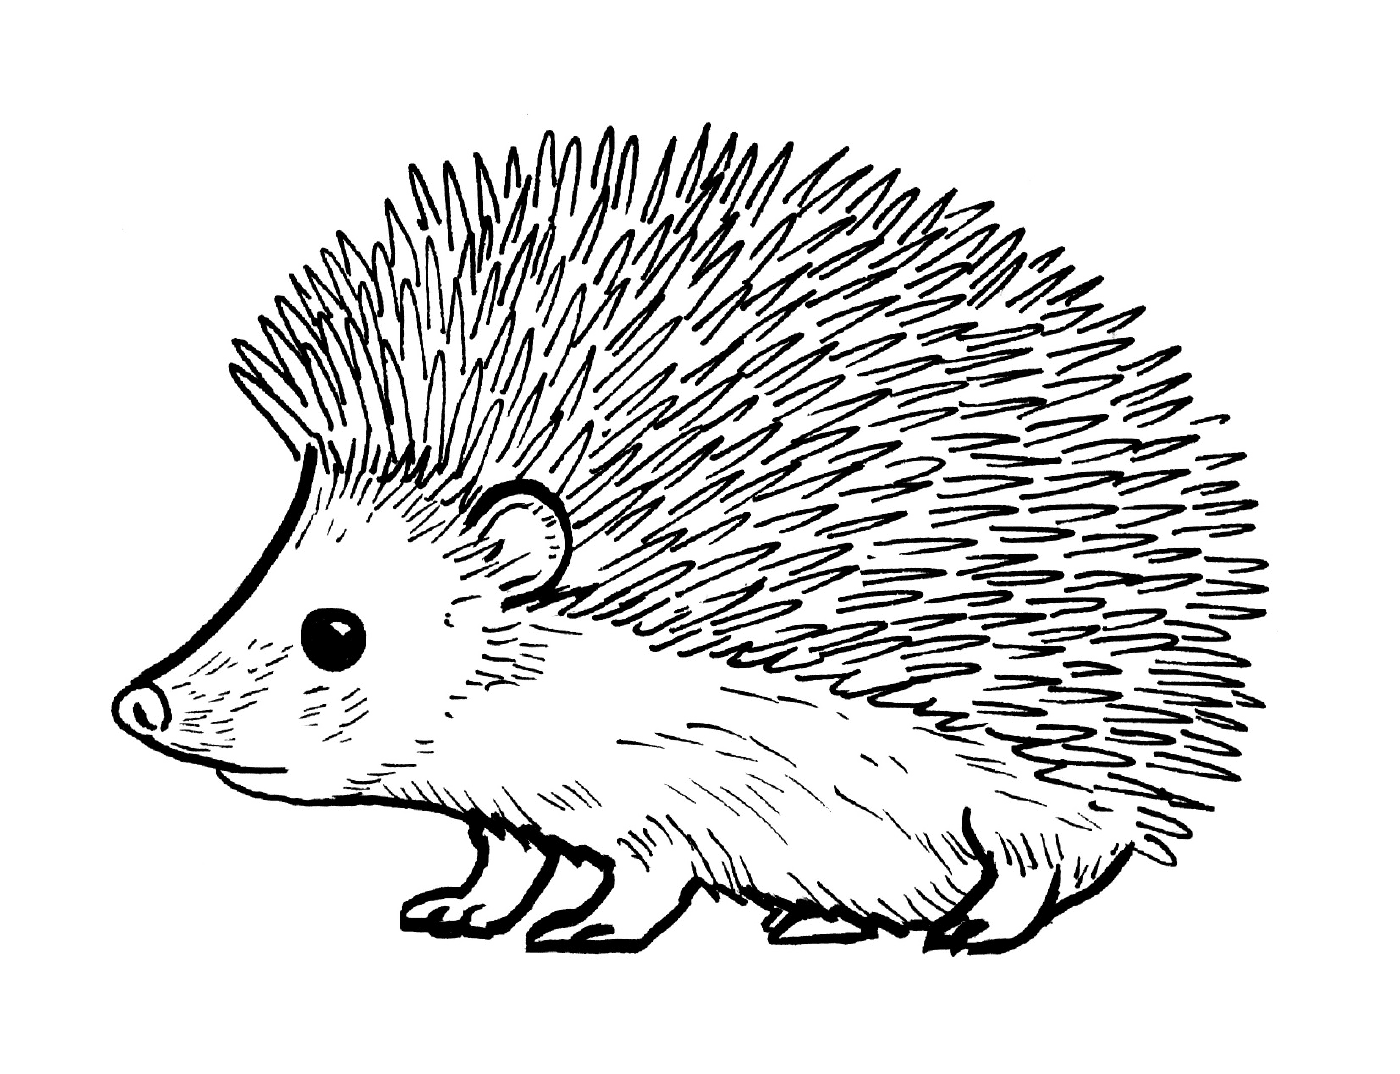  Realistic and cute hedgehog 